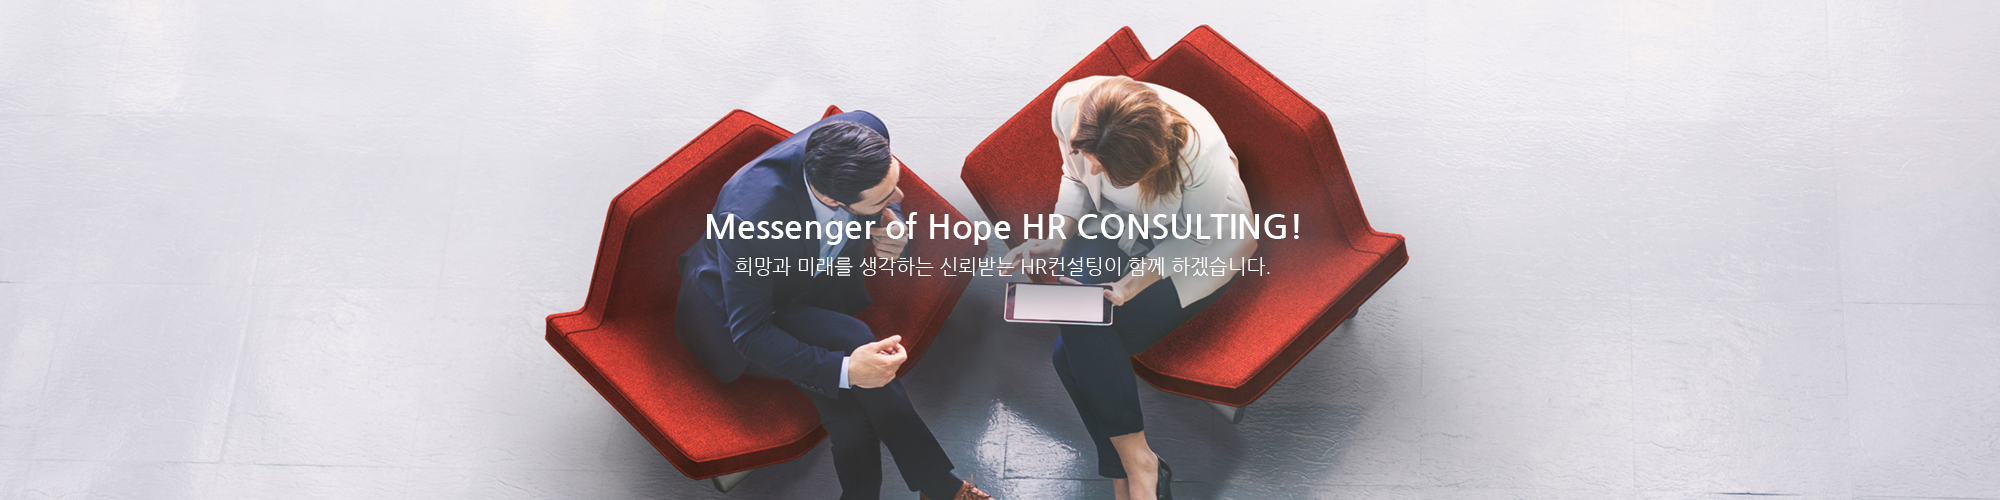 Messenger of Hope HR CONSULTING! / 희망과 미래를 생각하는 신뢰받는 HR컨설팅이 함께 하겠습니다.